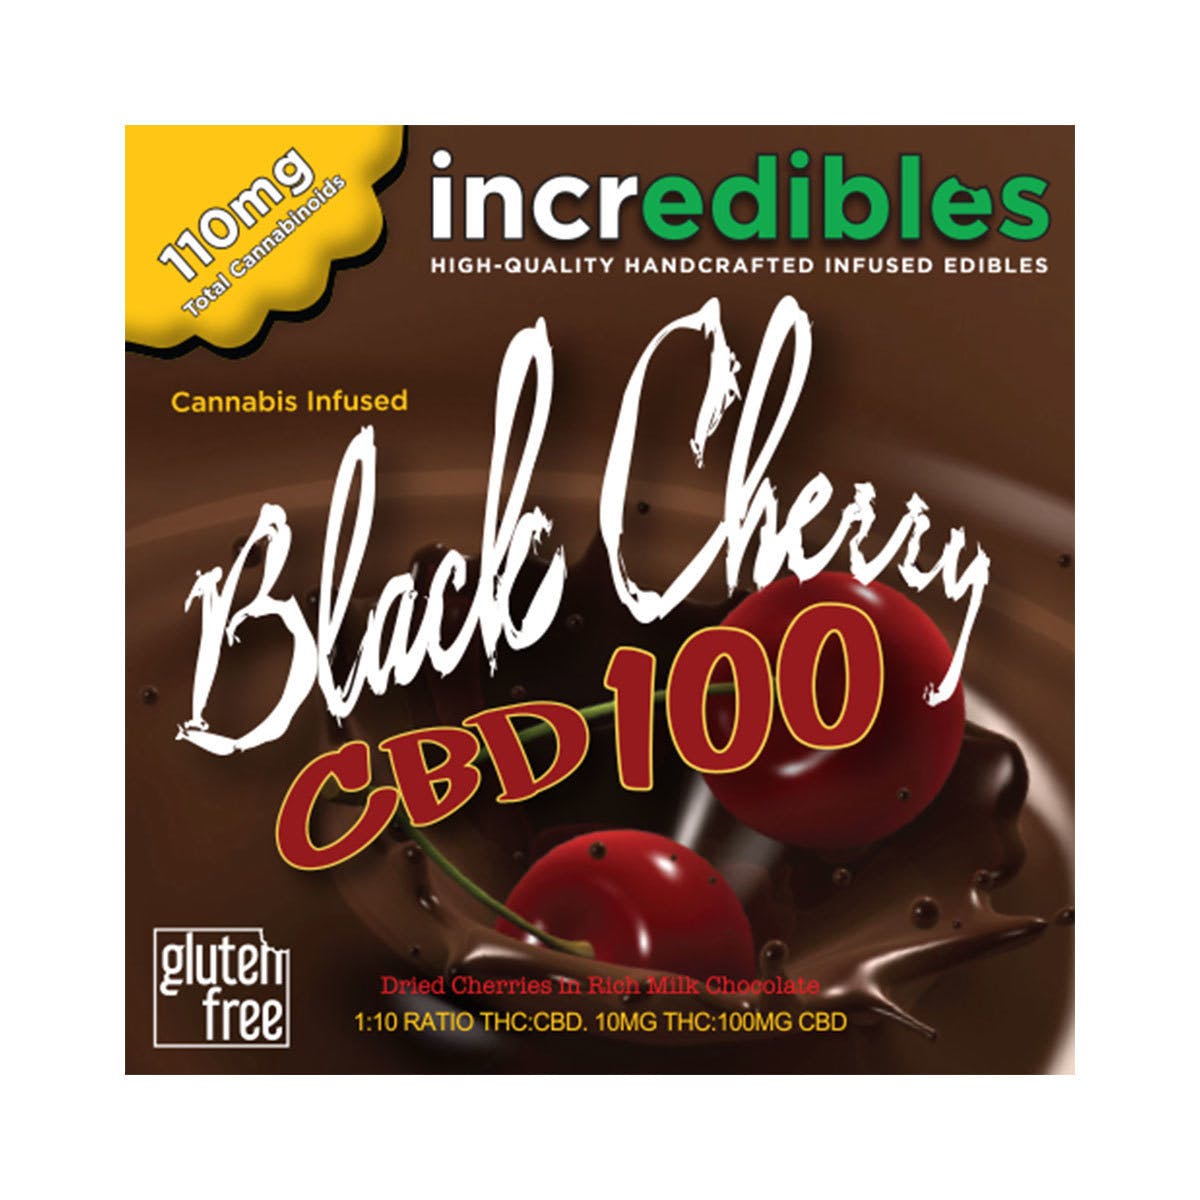 edible-incredibles-black-cherry-cbd-110-110mg-med